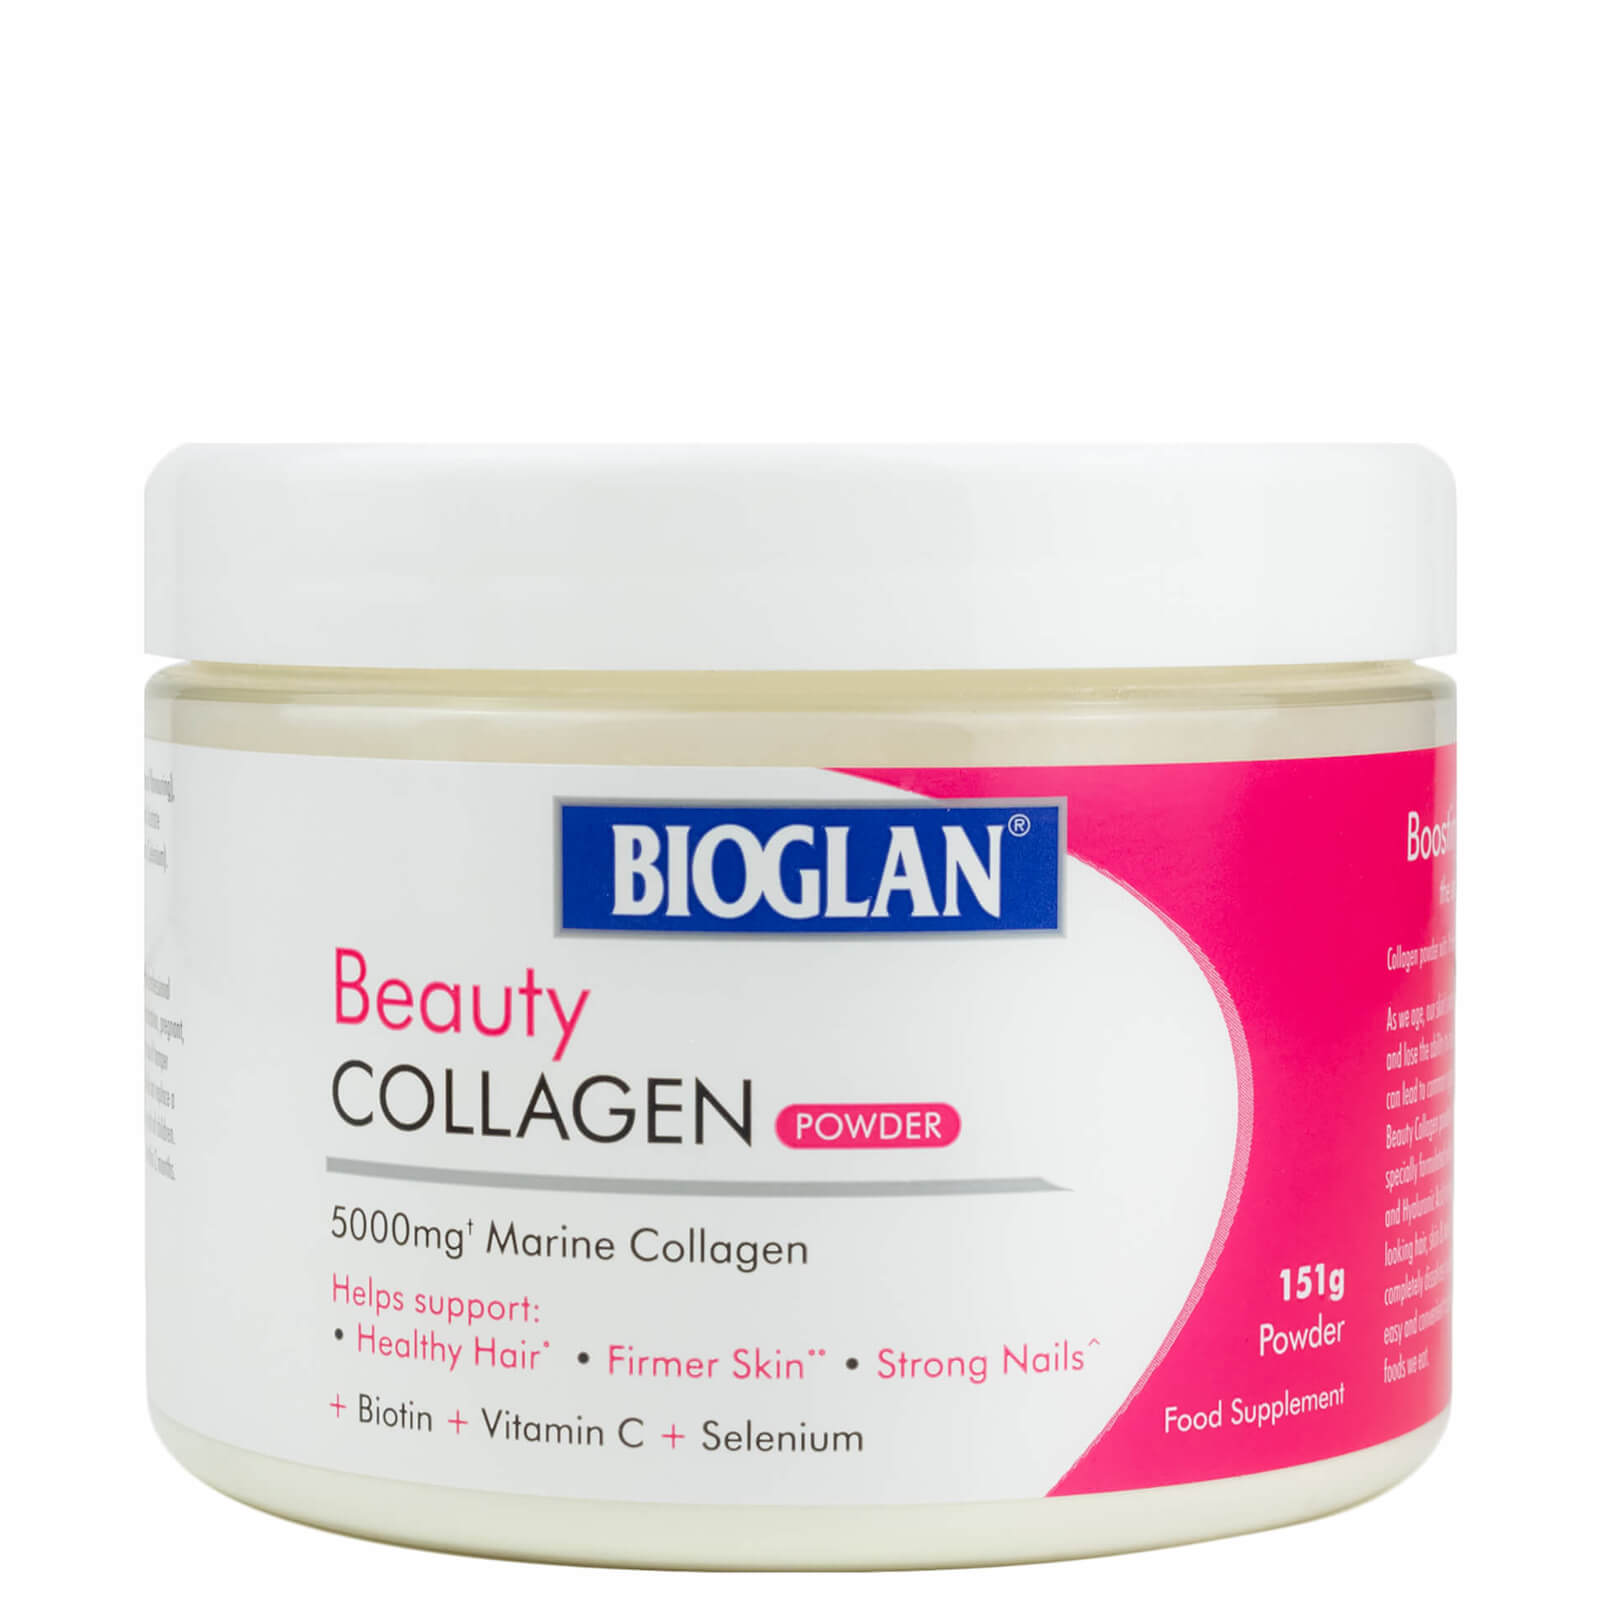 Bioglan Beauty Collagen Powder 151g lookfantastic.com imagine